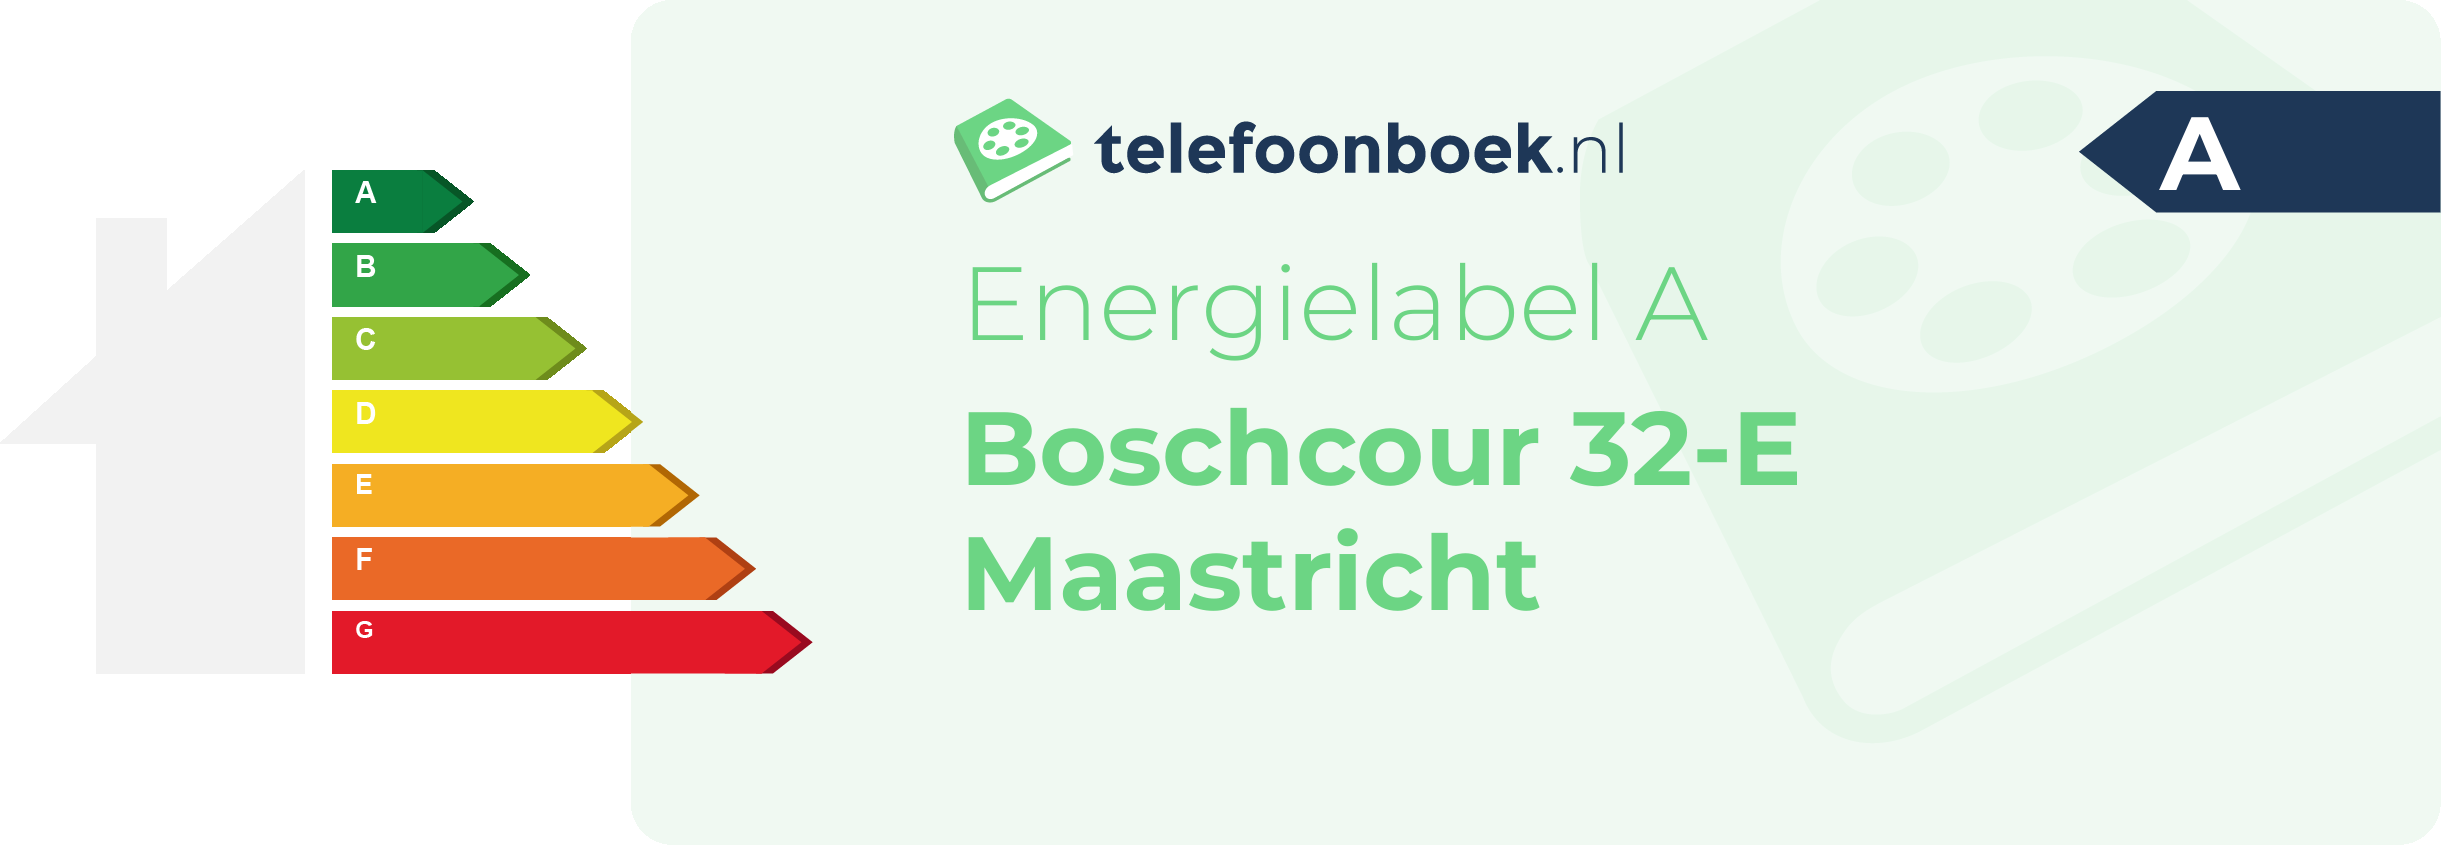 Energielabel Boschcour 32-E Maastricht